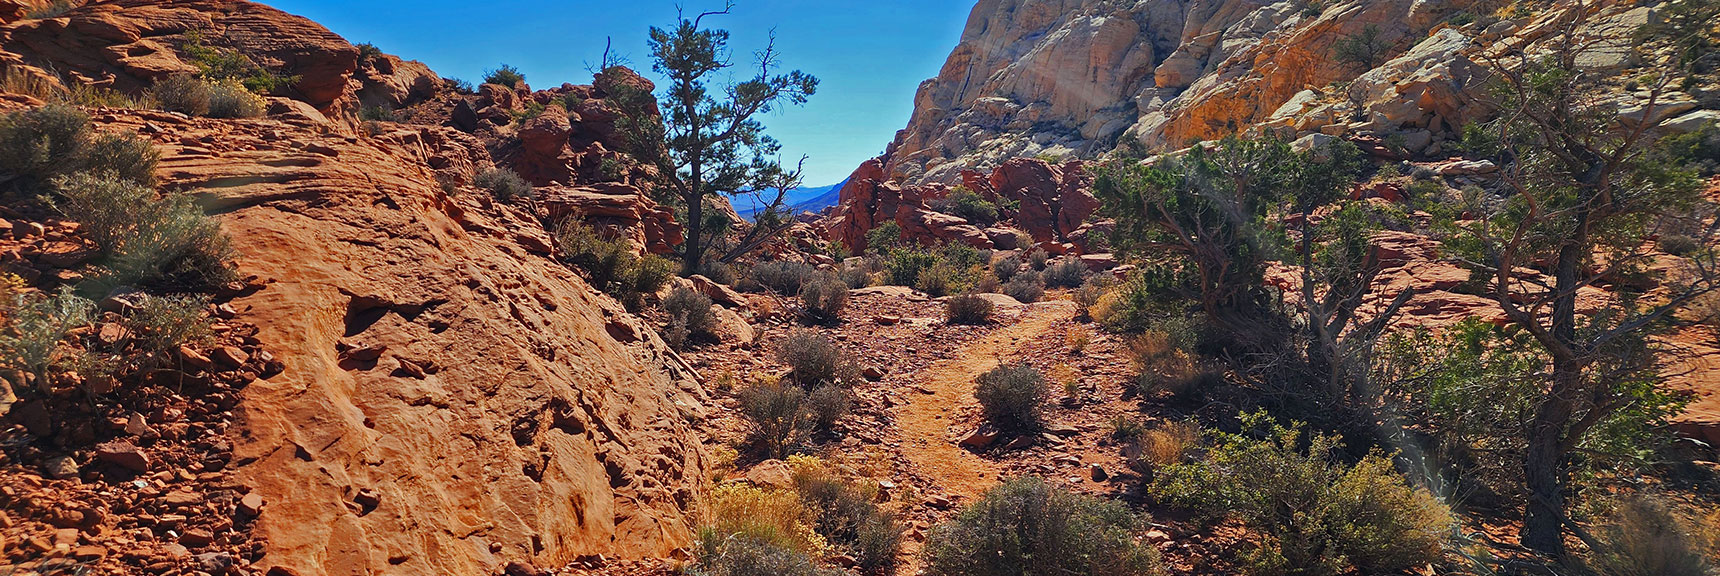 Entering Spectacular Sculpted Sandstone Entrance to Upper Ash Canyon | Pink Goblin Loop | Calico Basin, Nevada